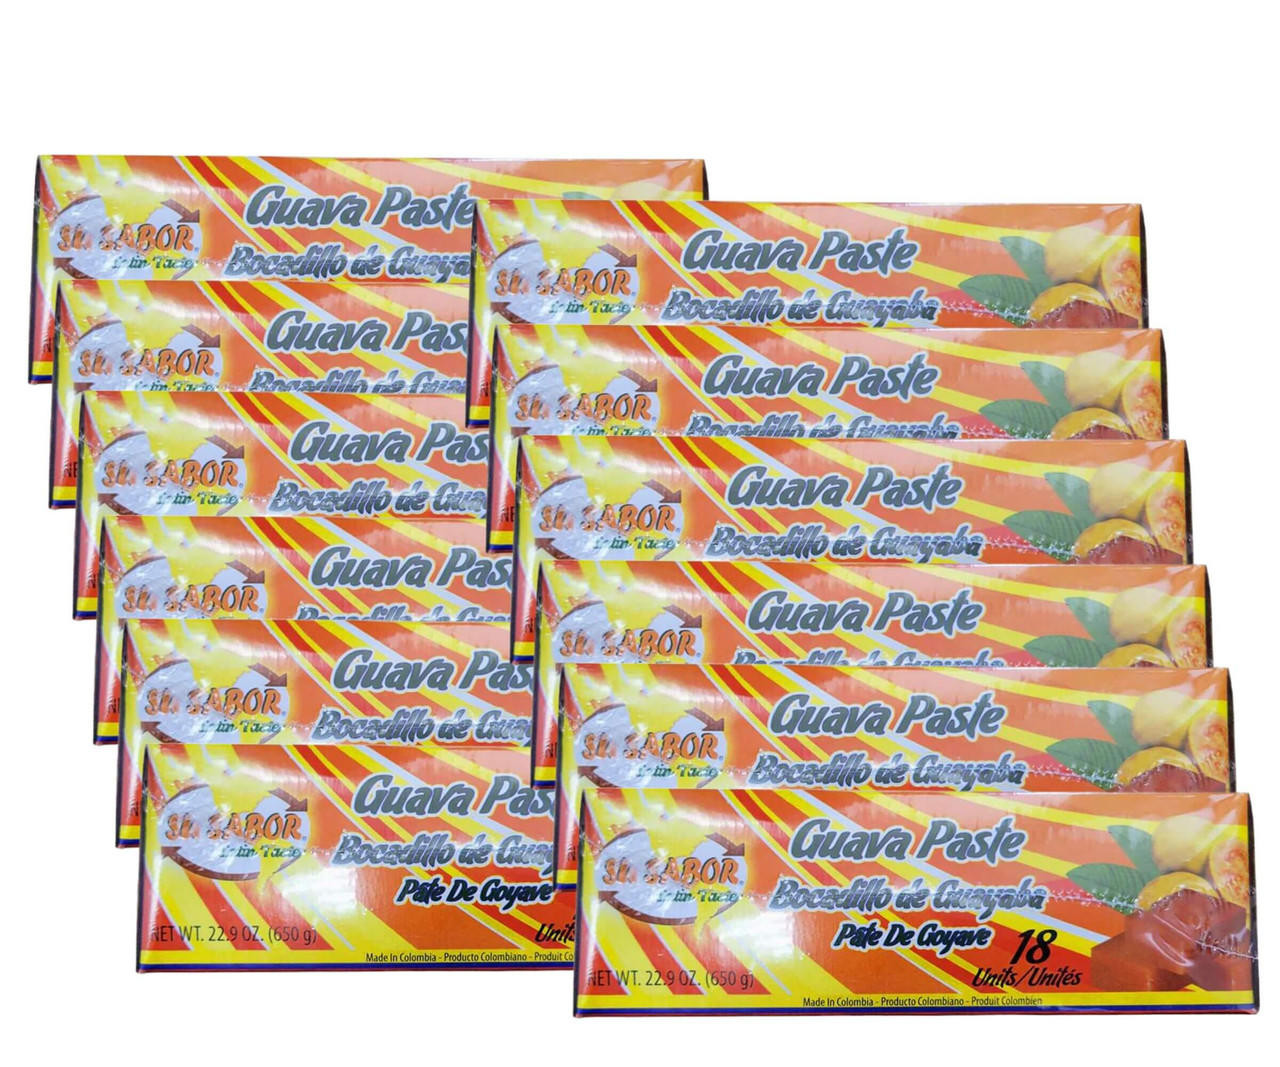  Su Sabor Bocadillo de Guayaba Regular 18/650g (12-Case) - Guava Paste Cubes: Sweet Delights for the Entire Family 